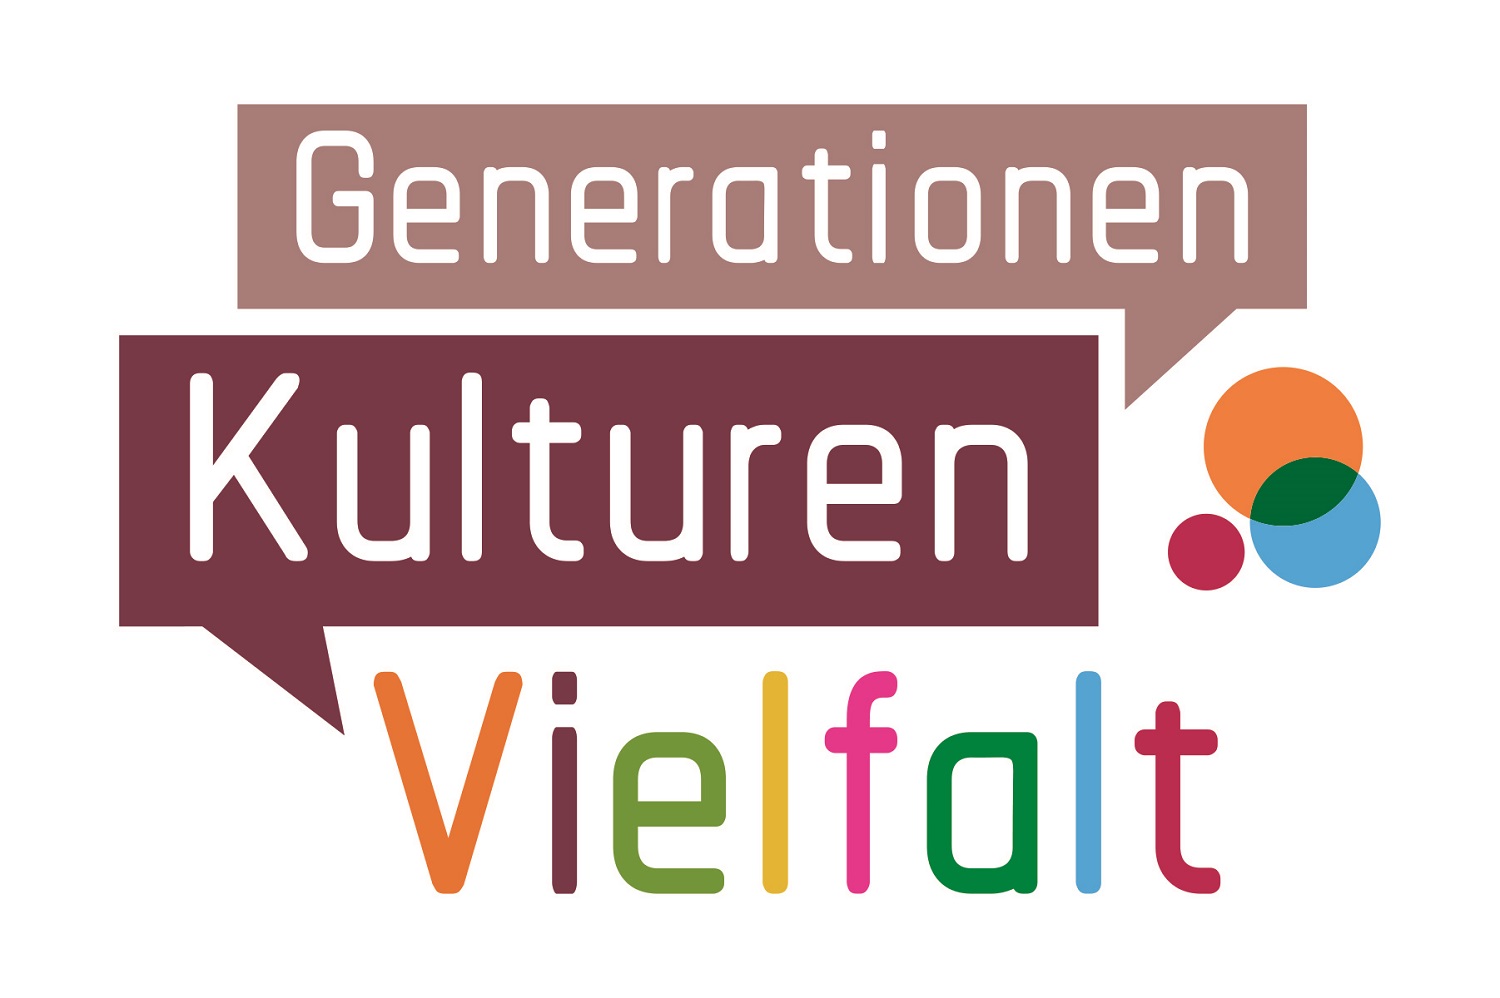 Generationen-kulturen-vielfalt-logo Cmyk